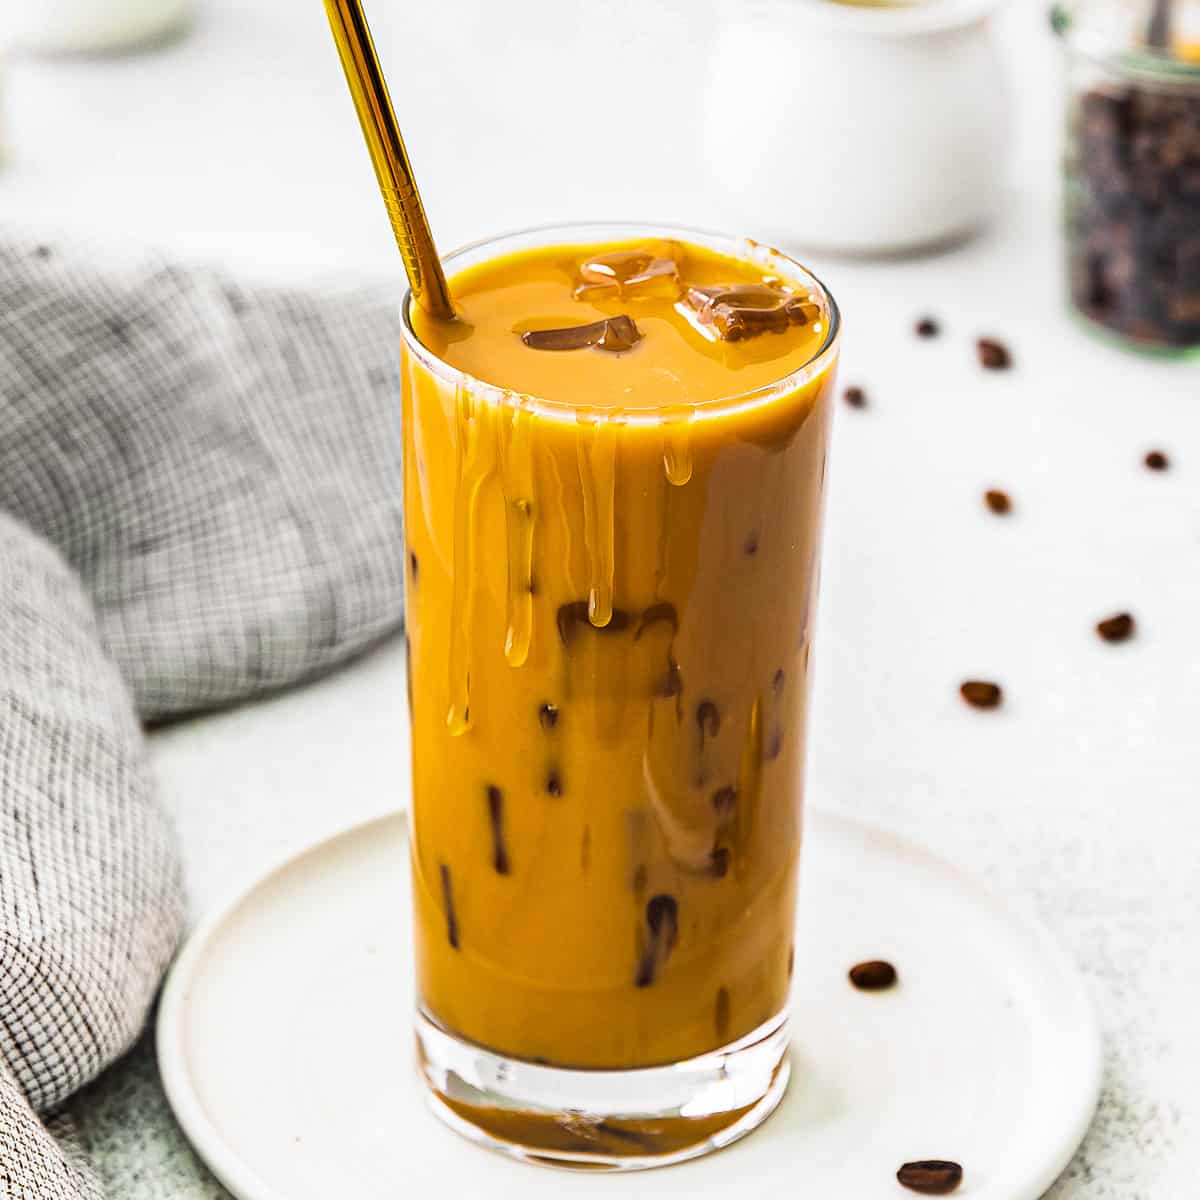 Iced Caramel Latte {Starbucks Copycat} – Snacks and Sips